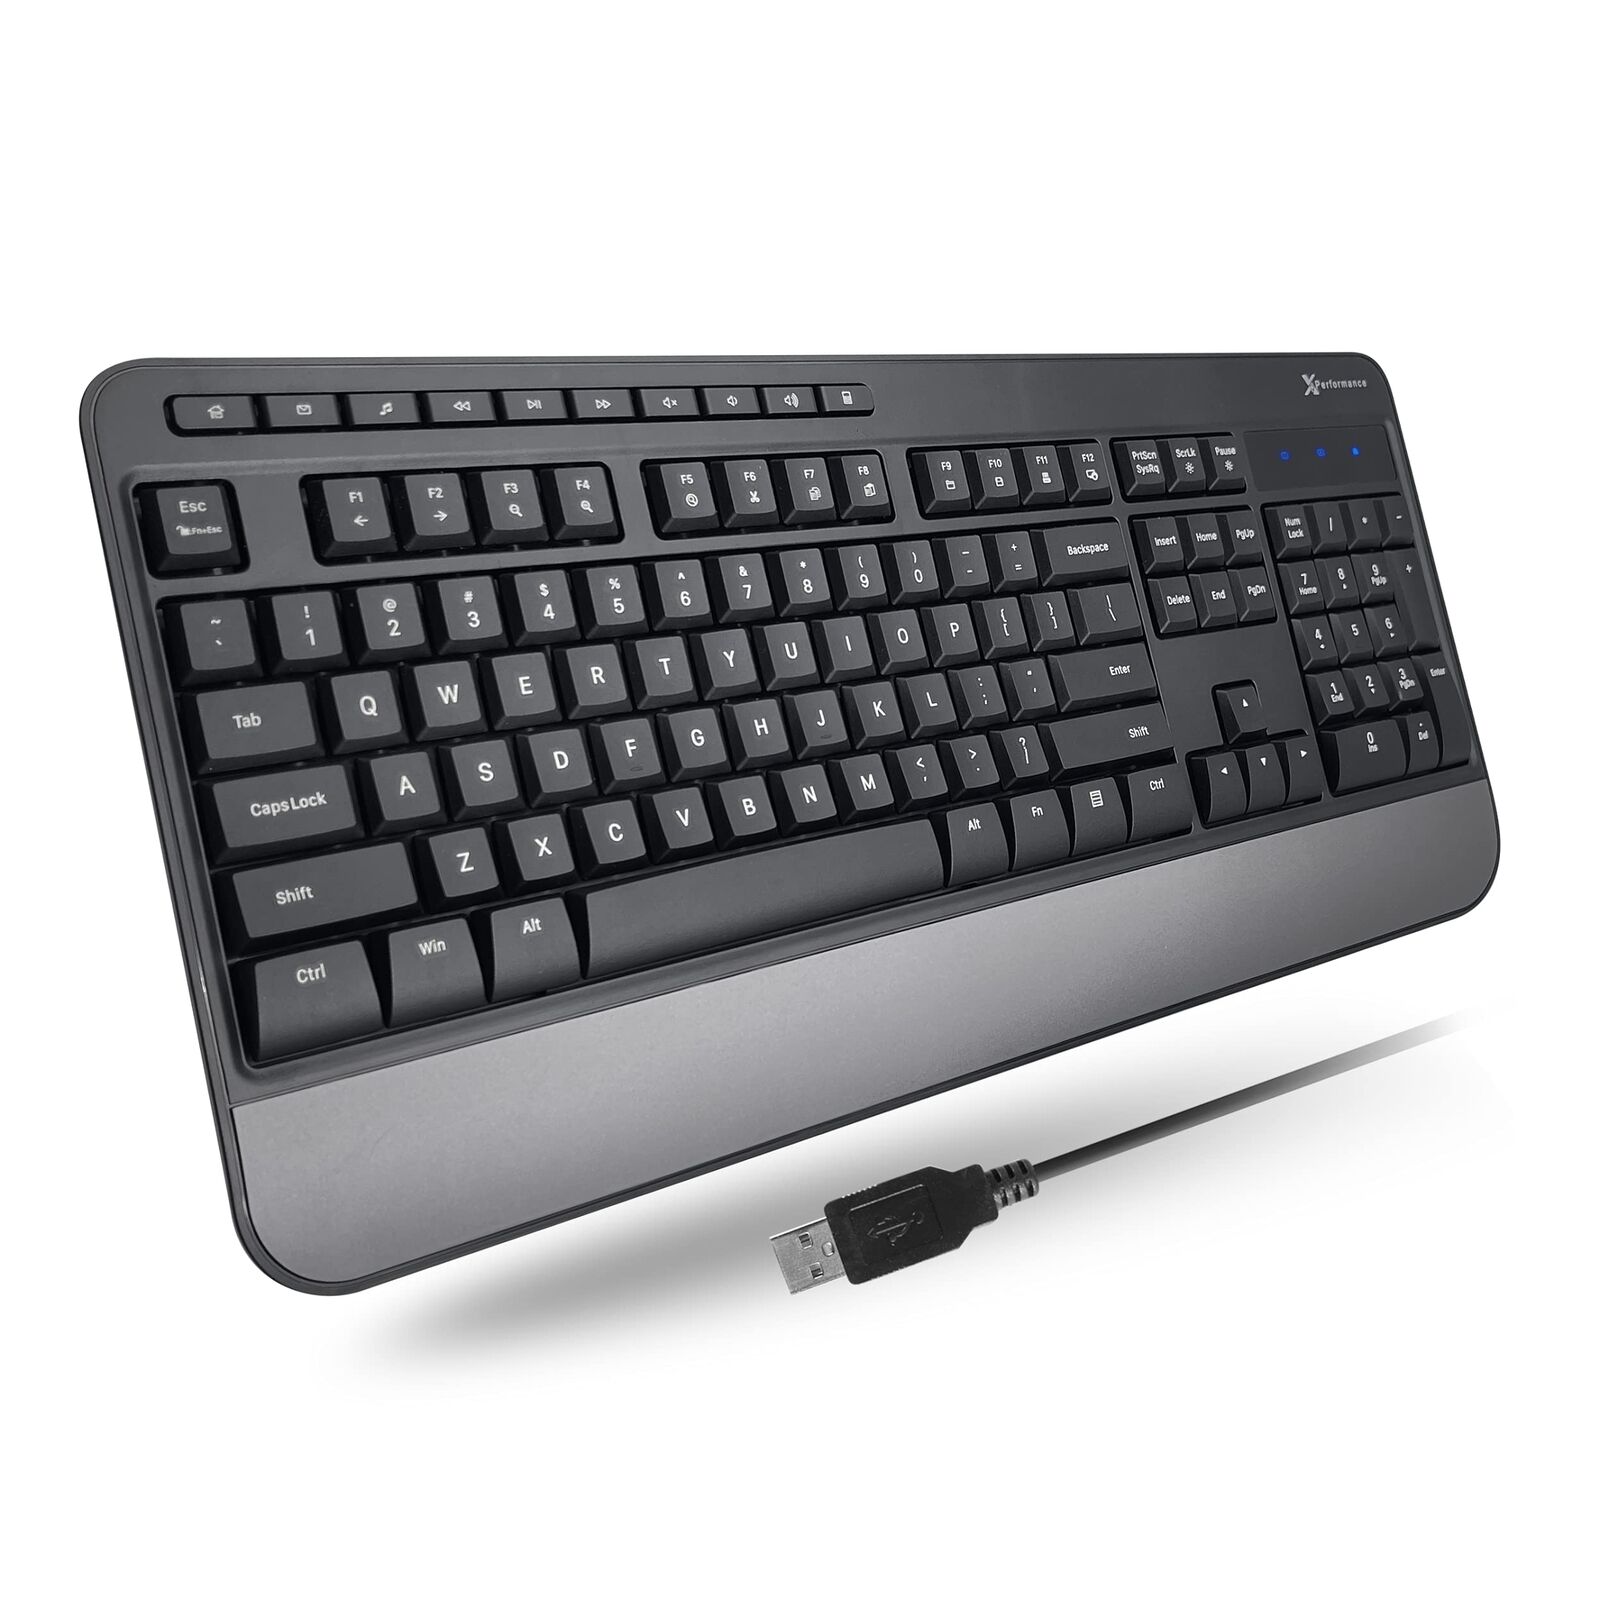 Multimedia USB Wired Keyboard - Take Control of Your Media - Ergonomic Full S...